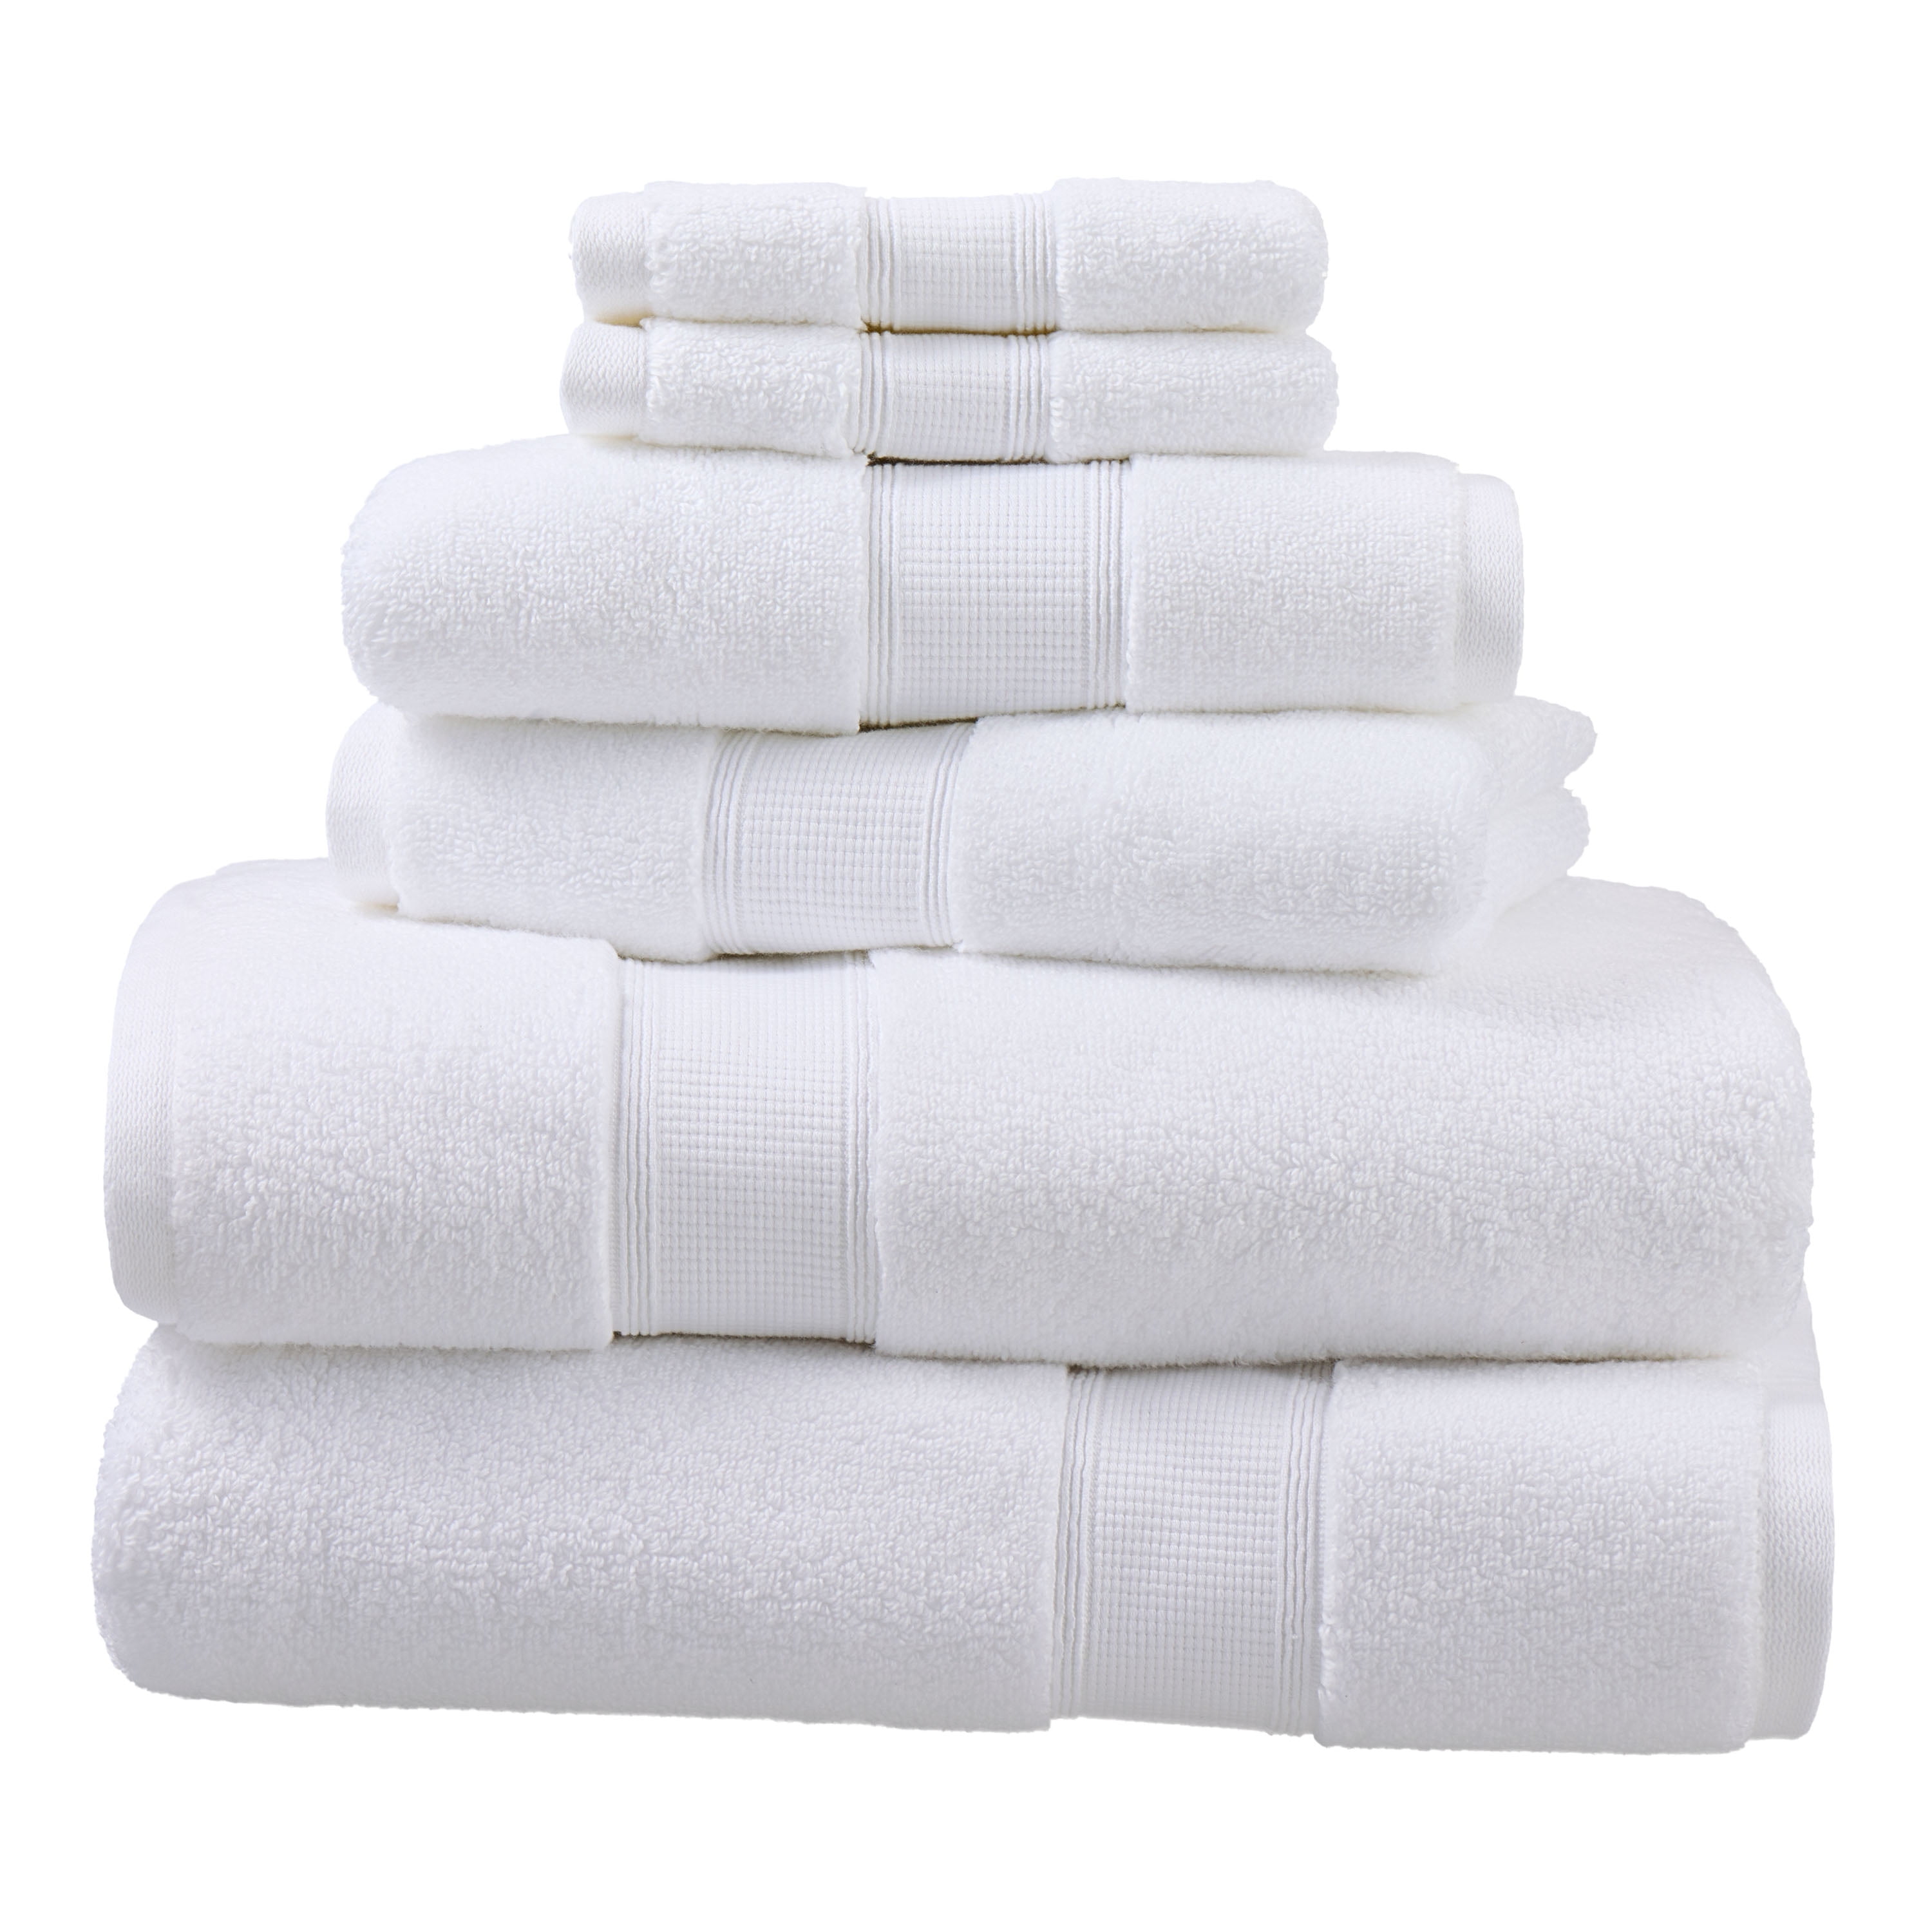 UpThrone Bath Towel Set of 6 - Cotton Hotel Bathroom Towels, Dark Grey